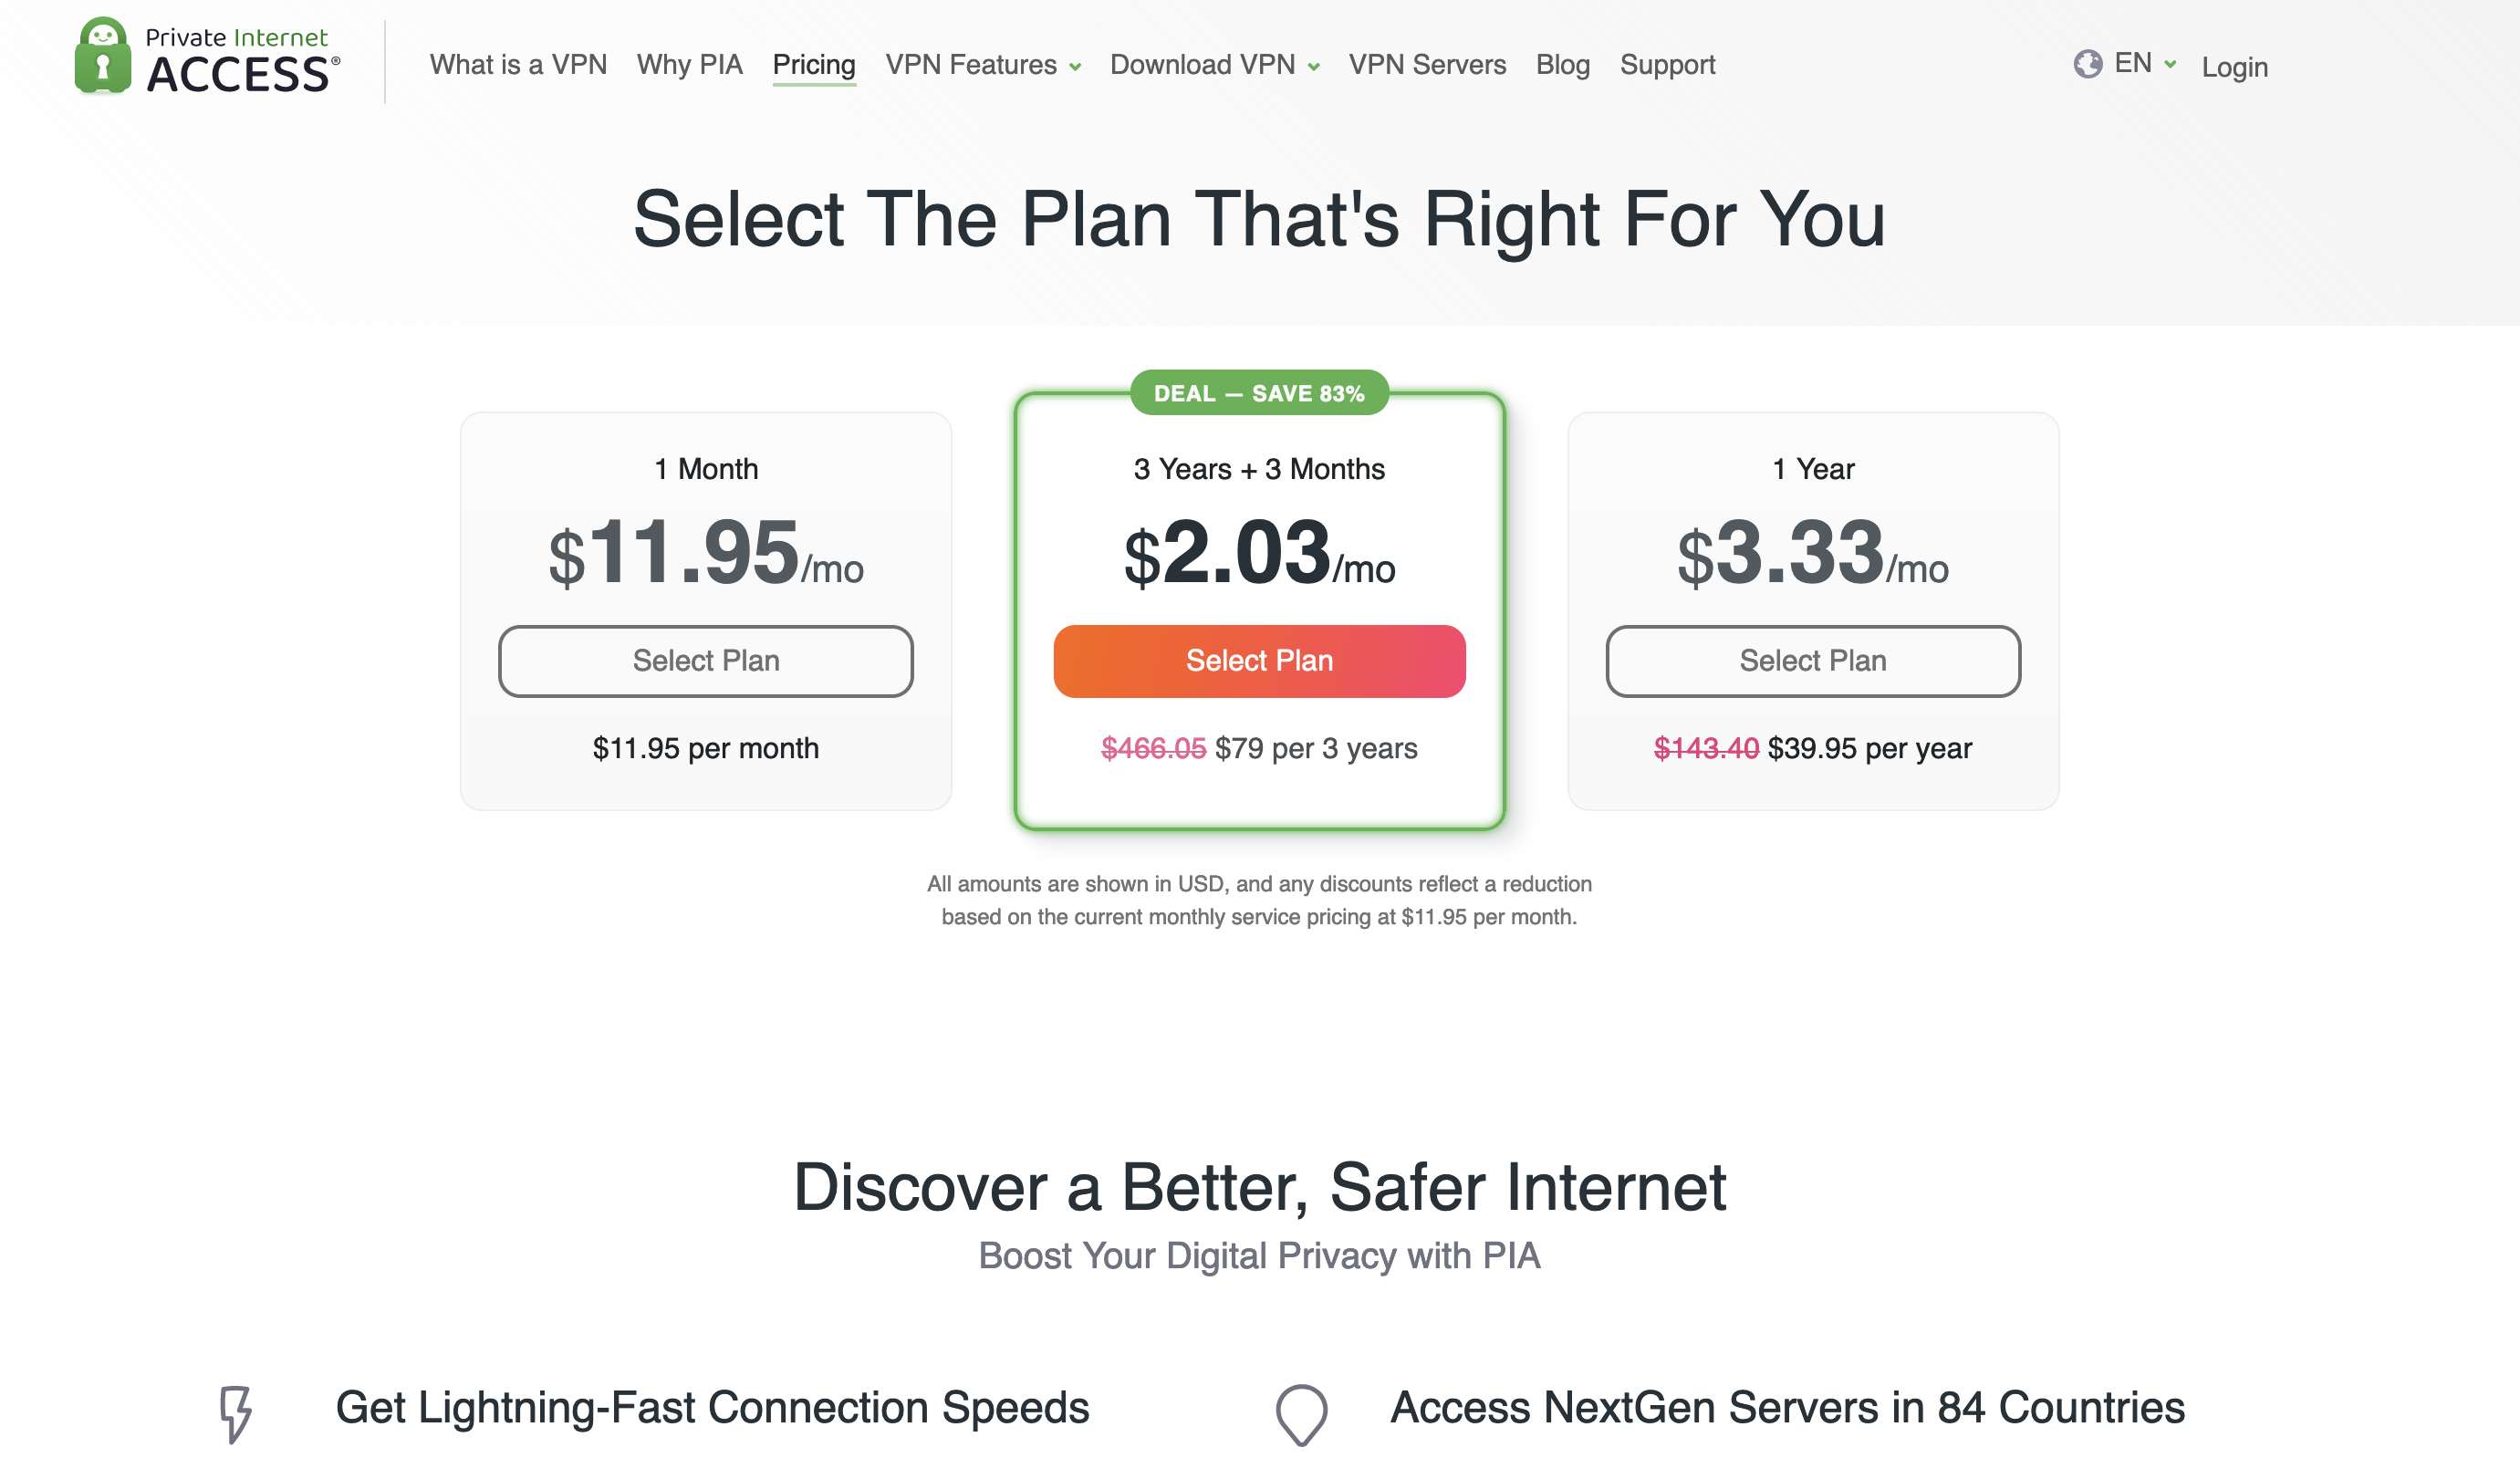 Private Internet Access Pricing